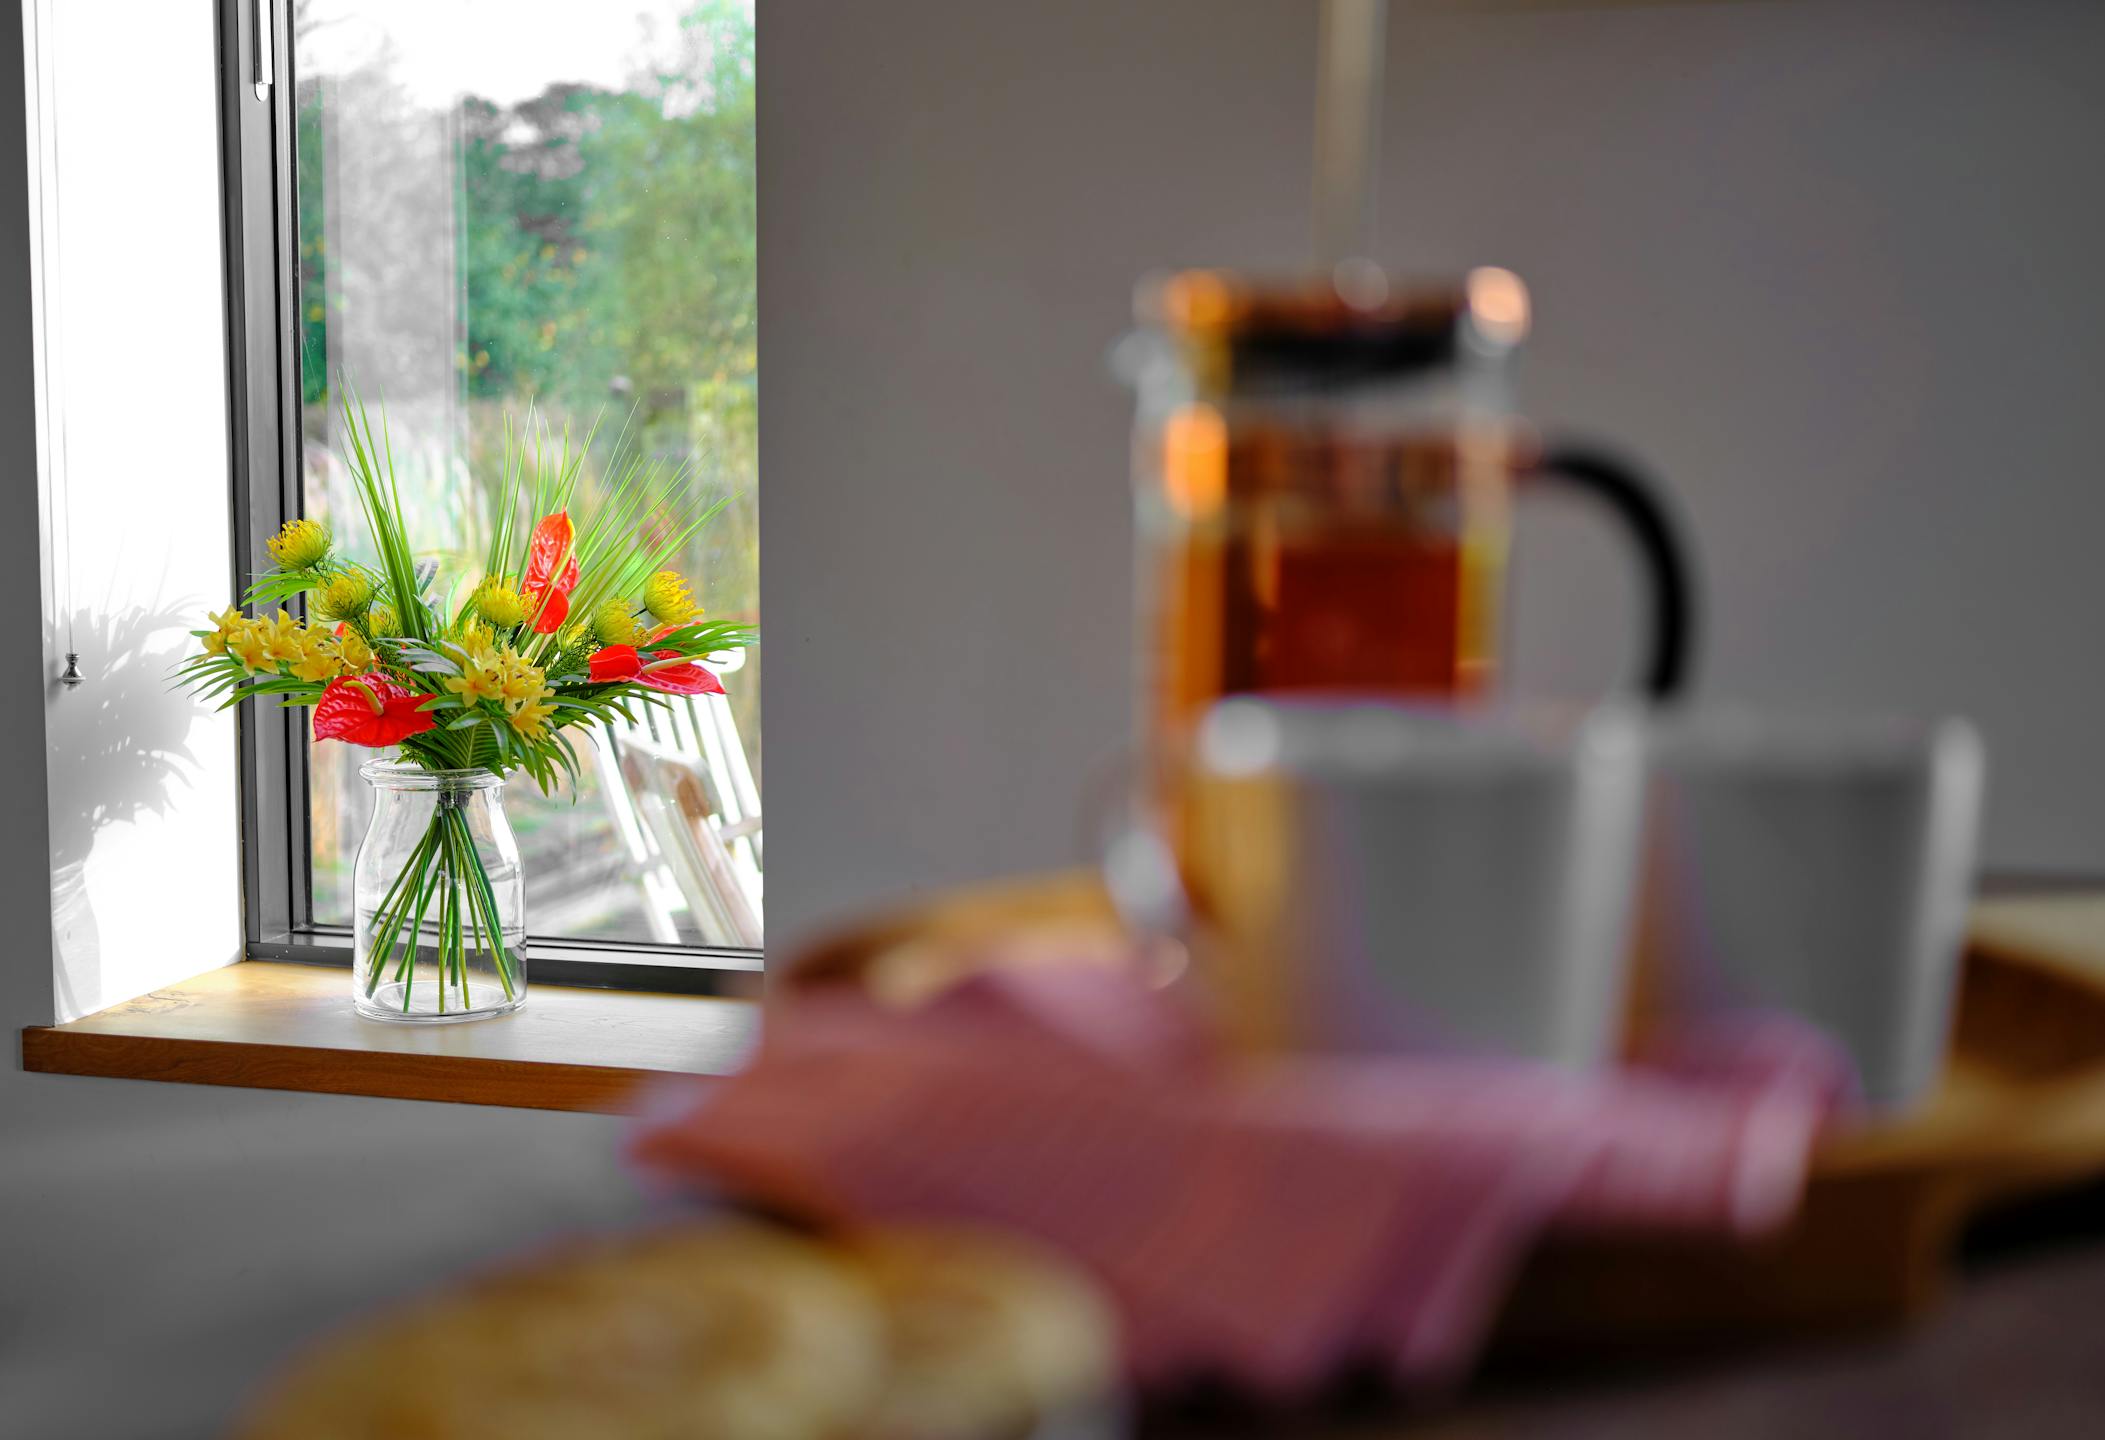 Artificial bahama mama bouquet on wood kitchen window ledge